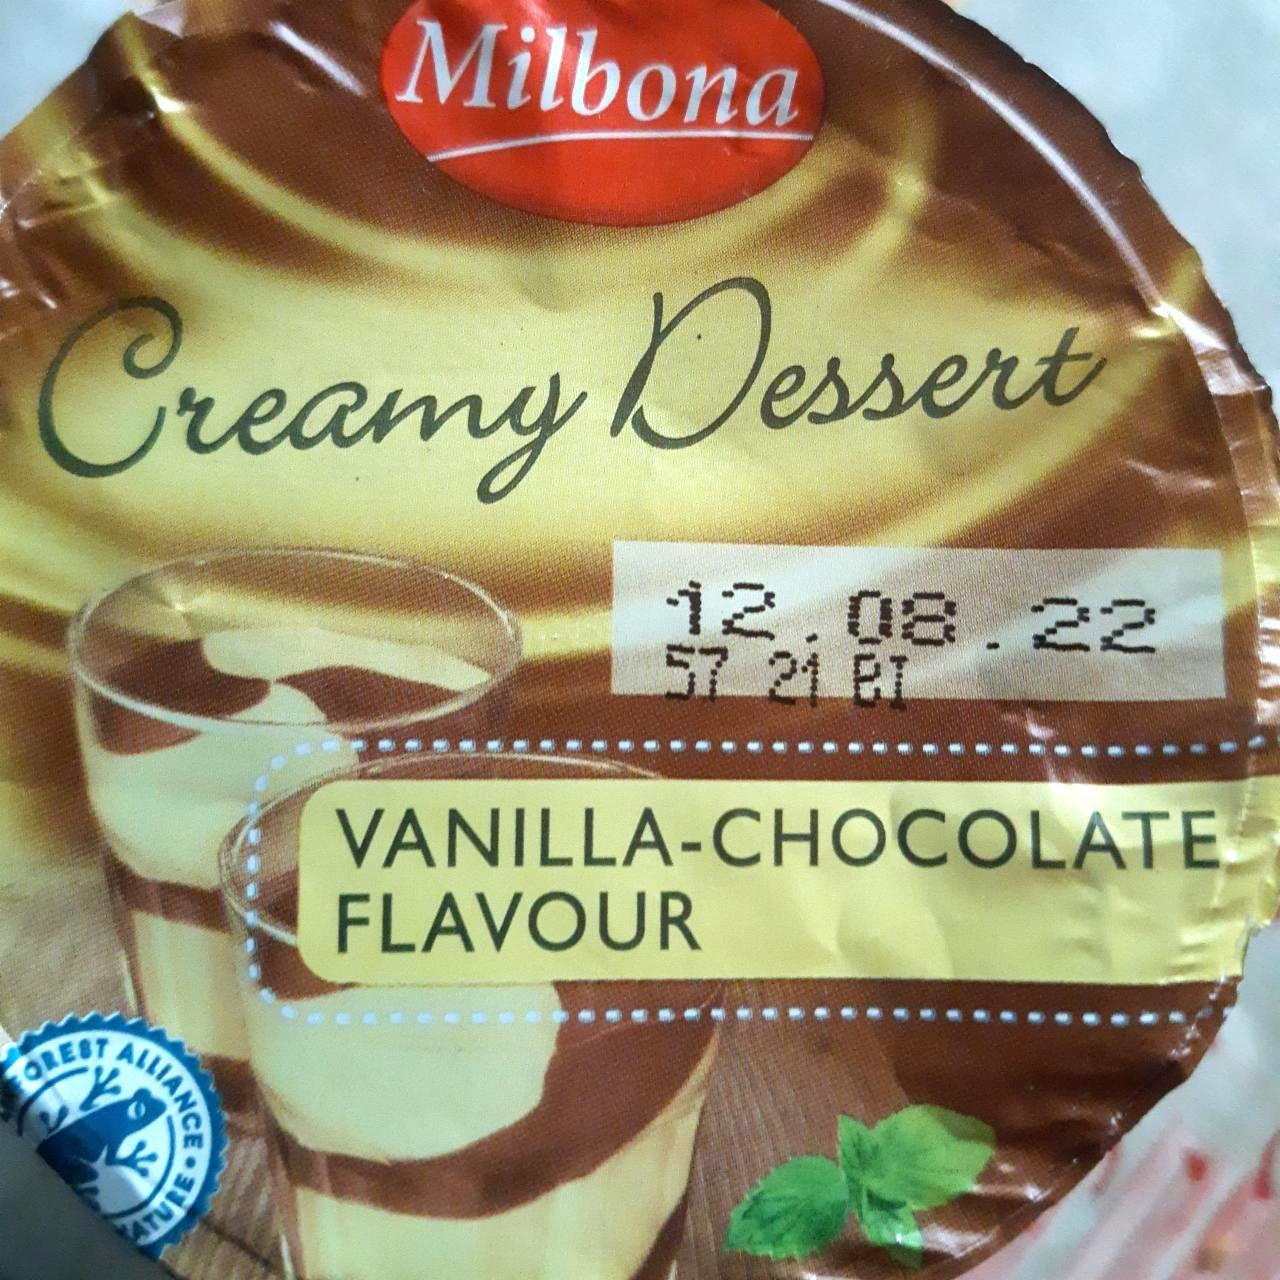 Képek - Creamy dessert Vanilla-chocolate flavour Milbona